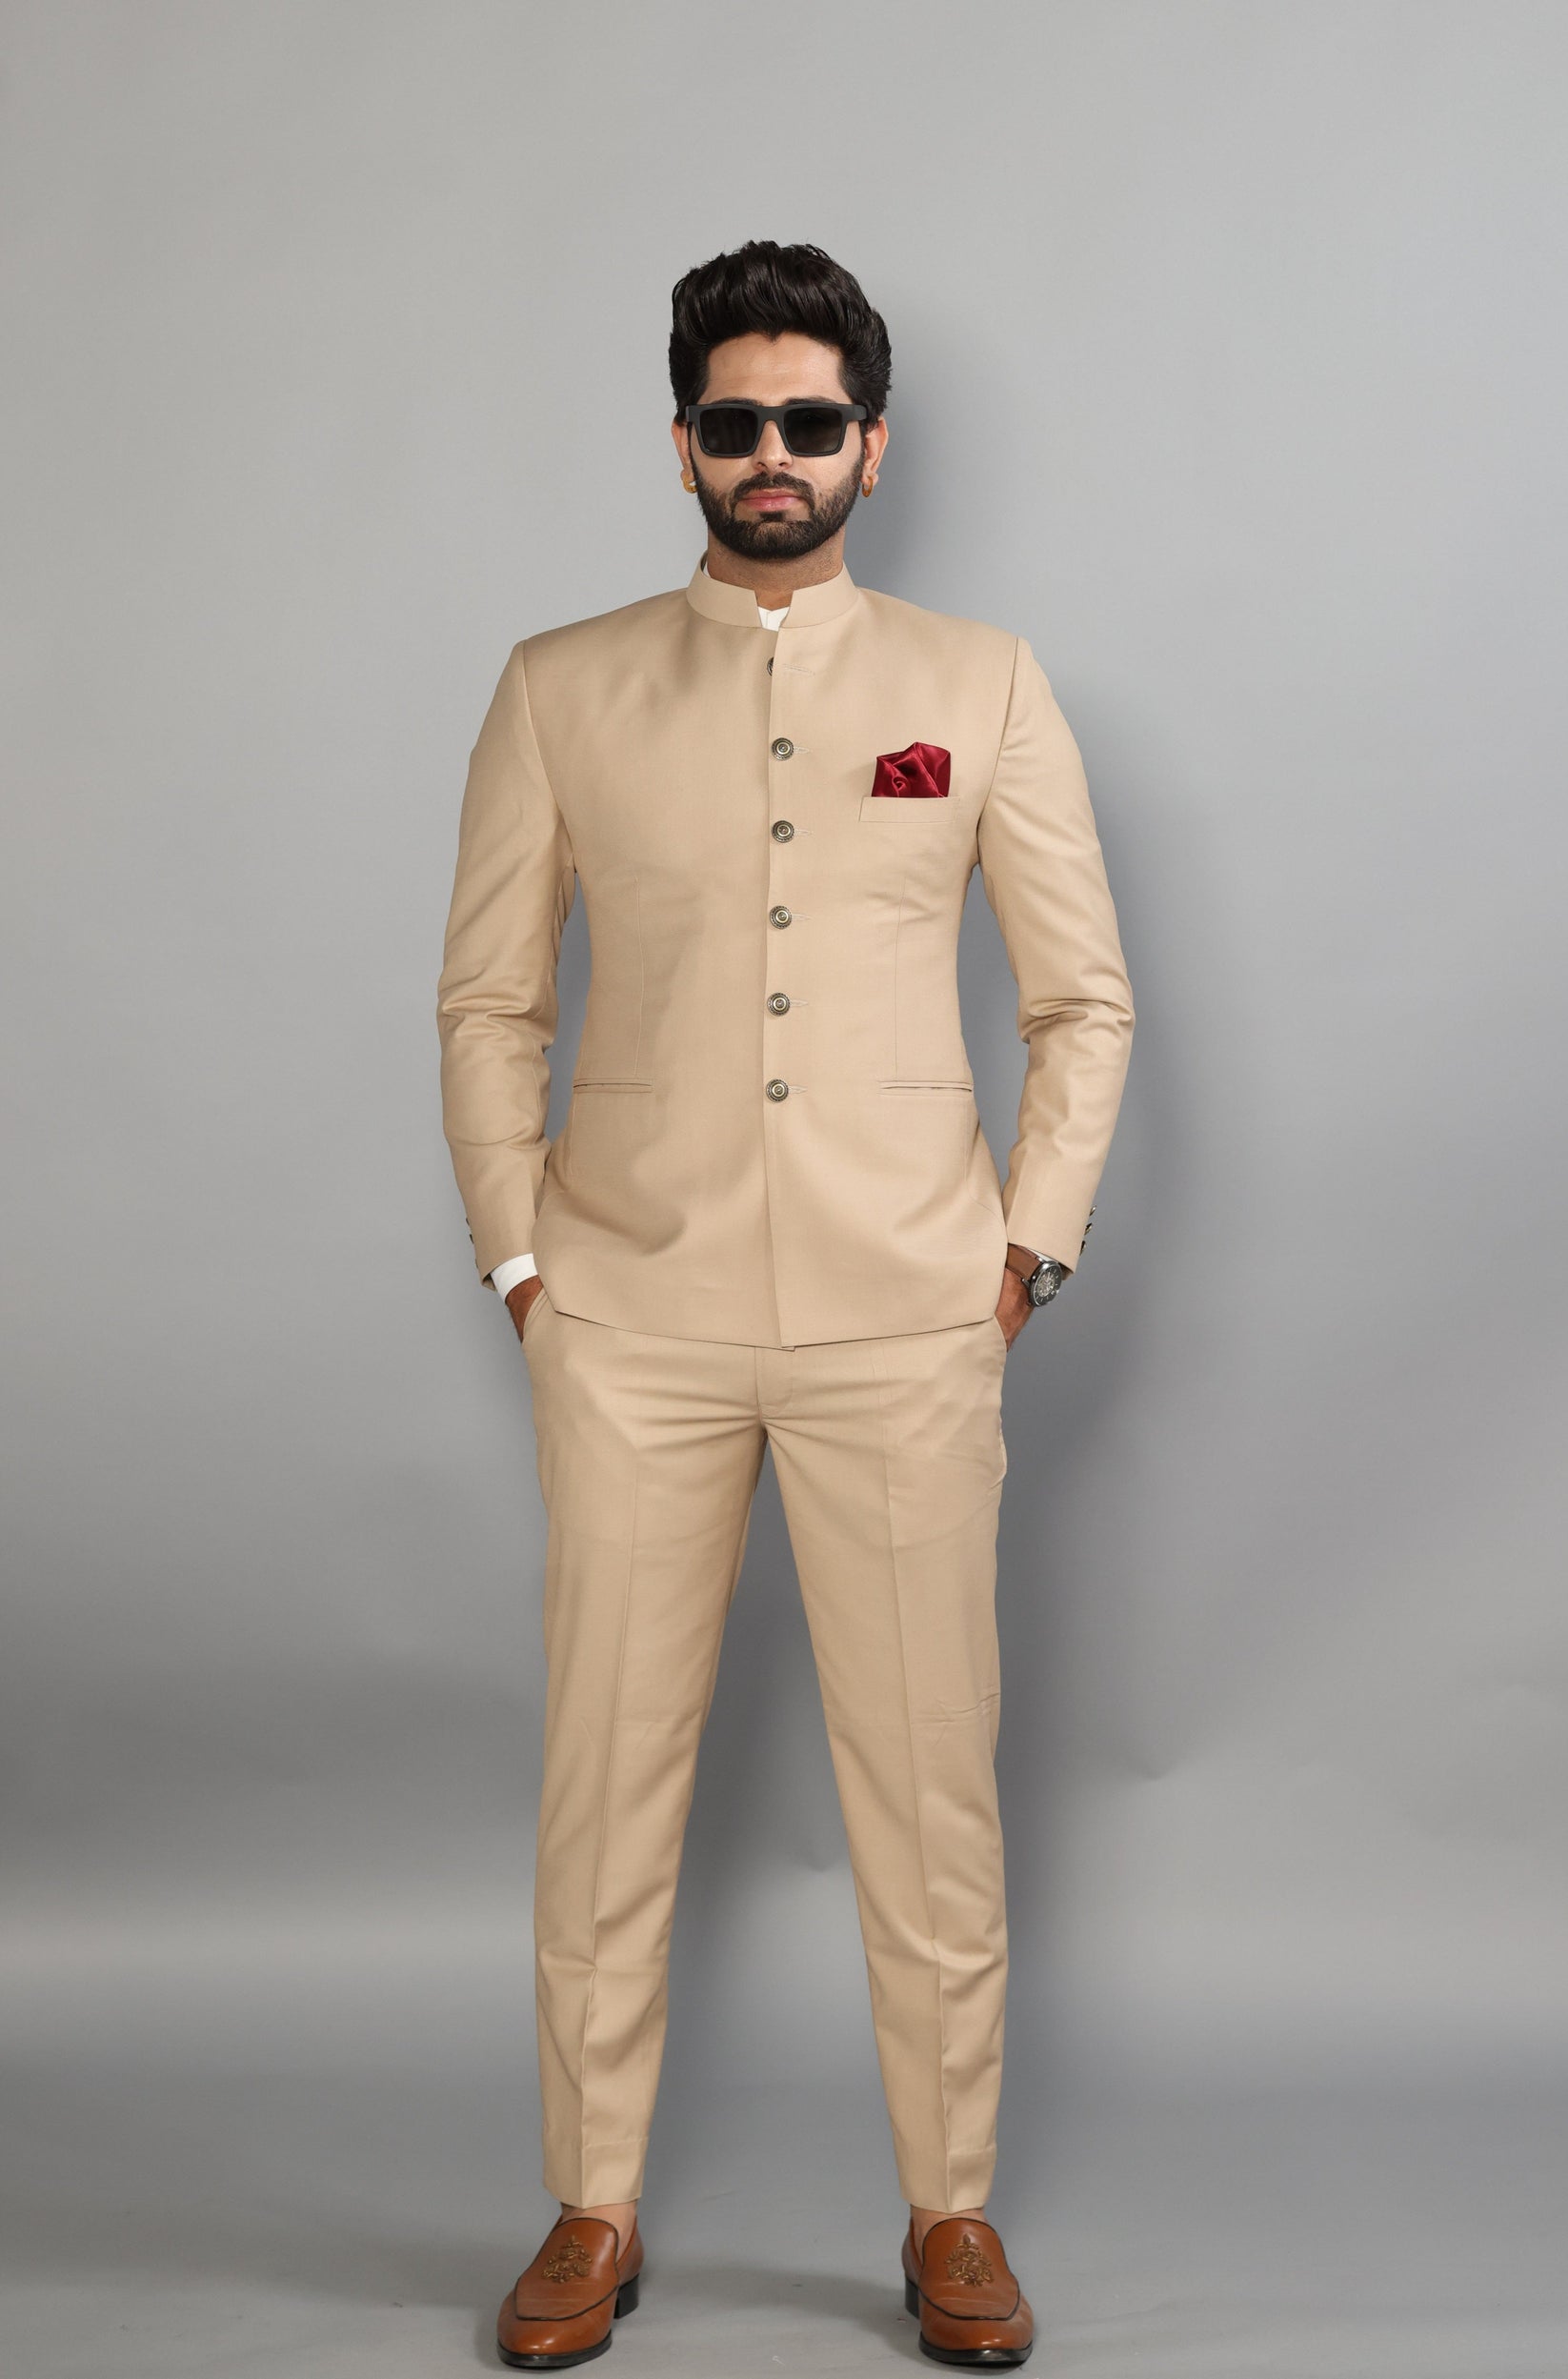 Rajanyas Traditional Khaki Jodhpuri Suit| Perfect for Wedding and Fest